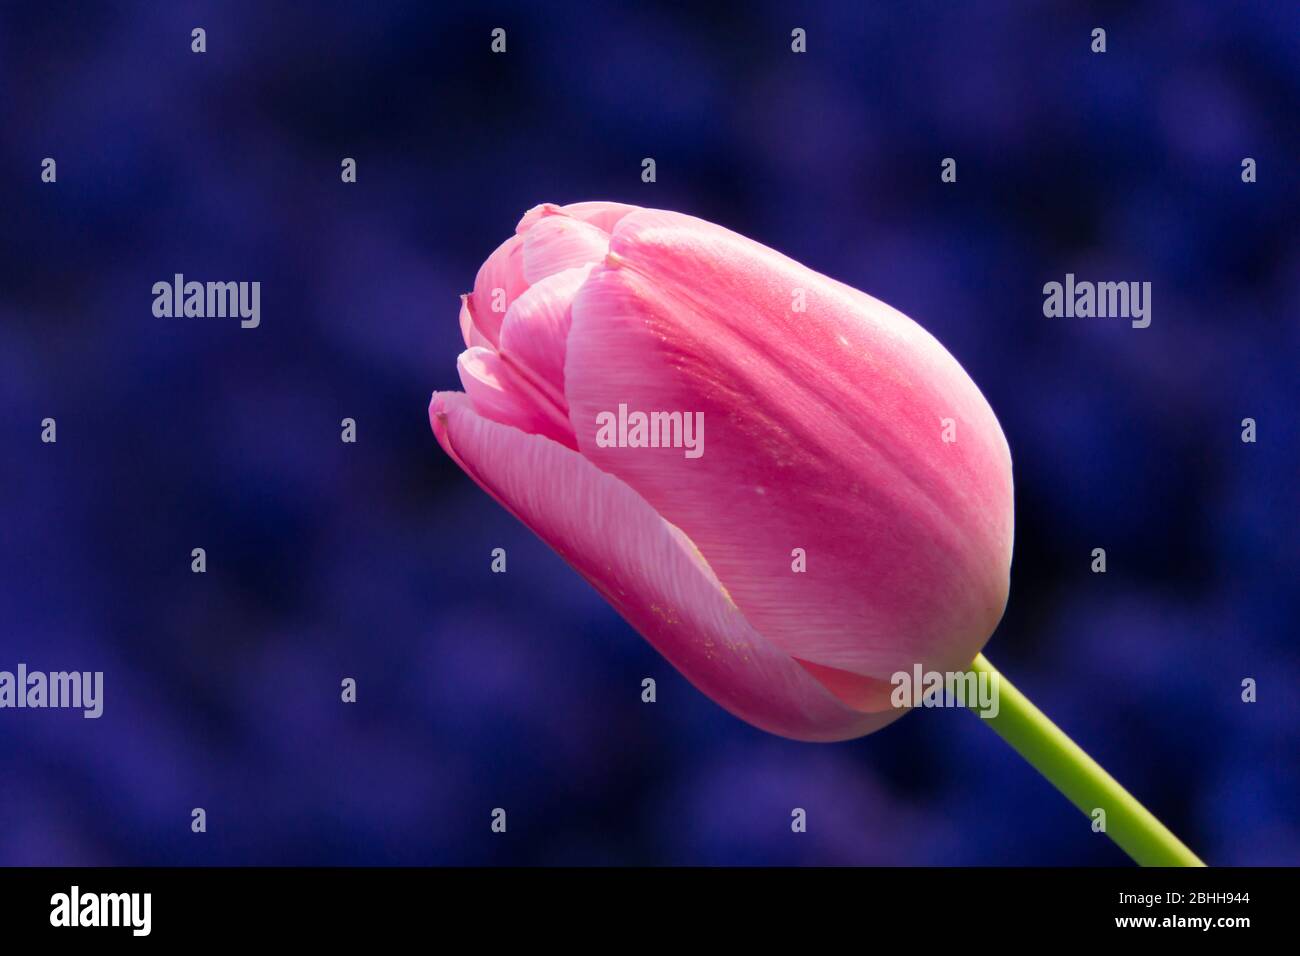 pink yulip close up on purple background Stock Photo